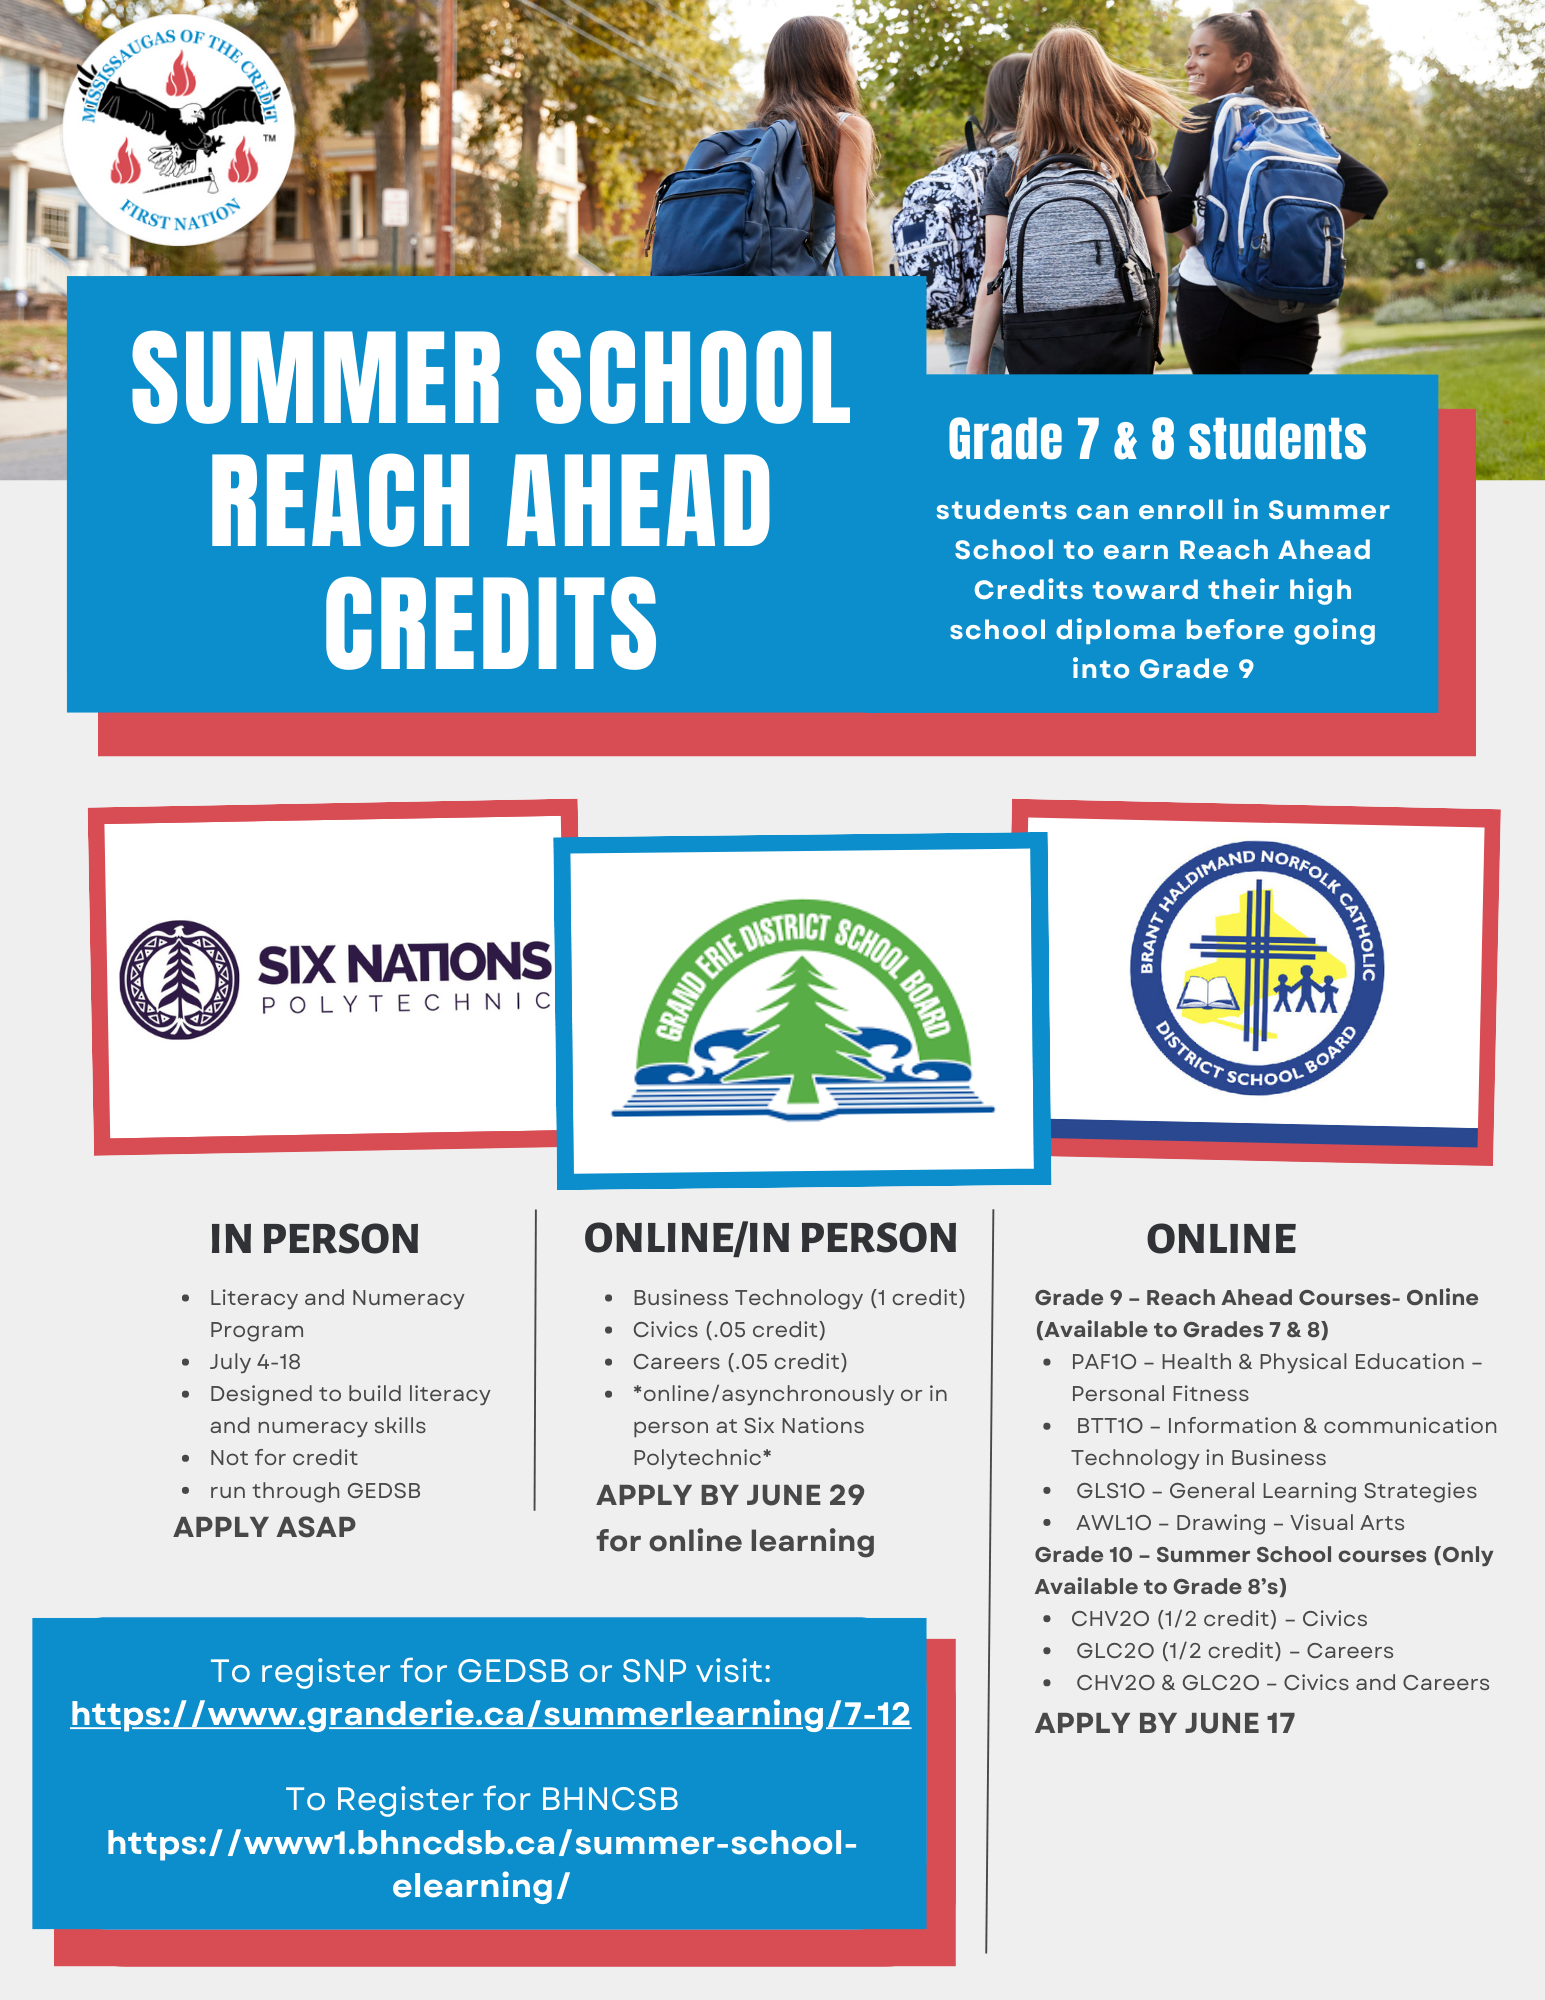 Summer School Reach Ahead Credits for Grade 7 & 8